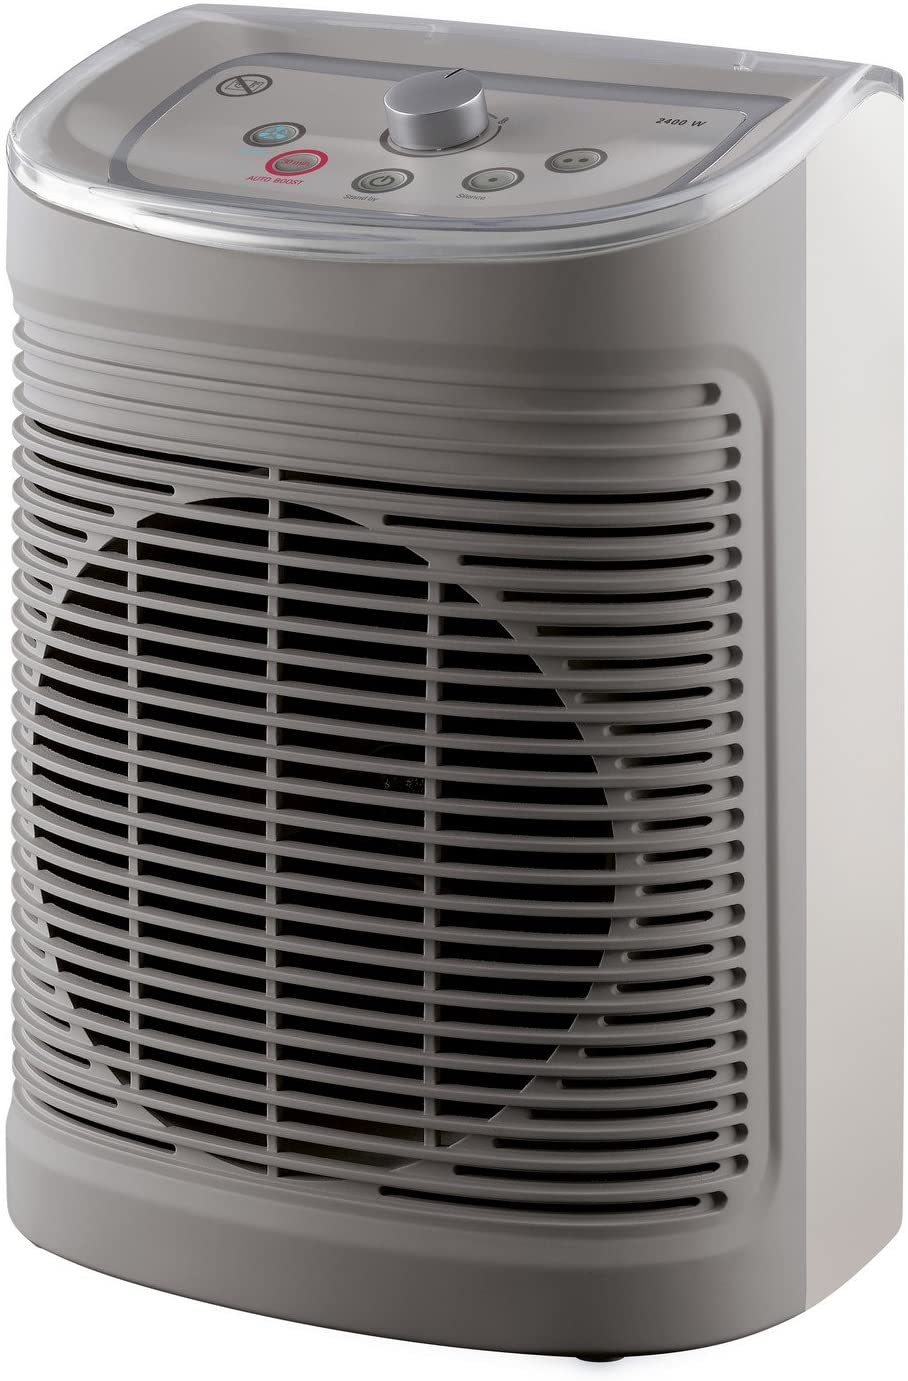 Chauffage ventilateur 2 en 1 clatronic - Conforama